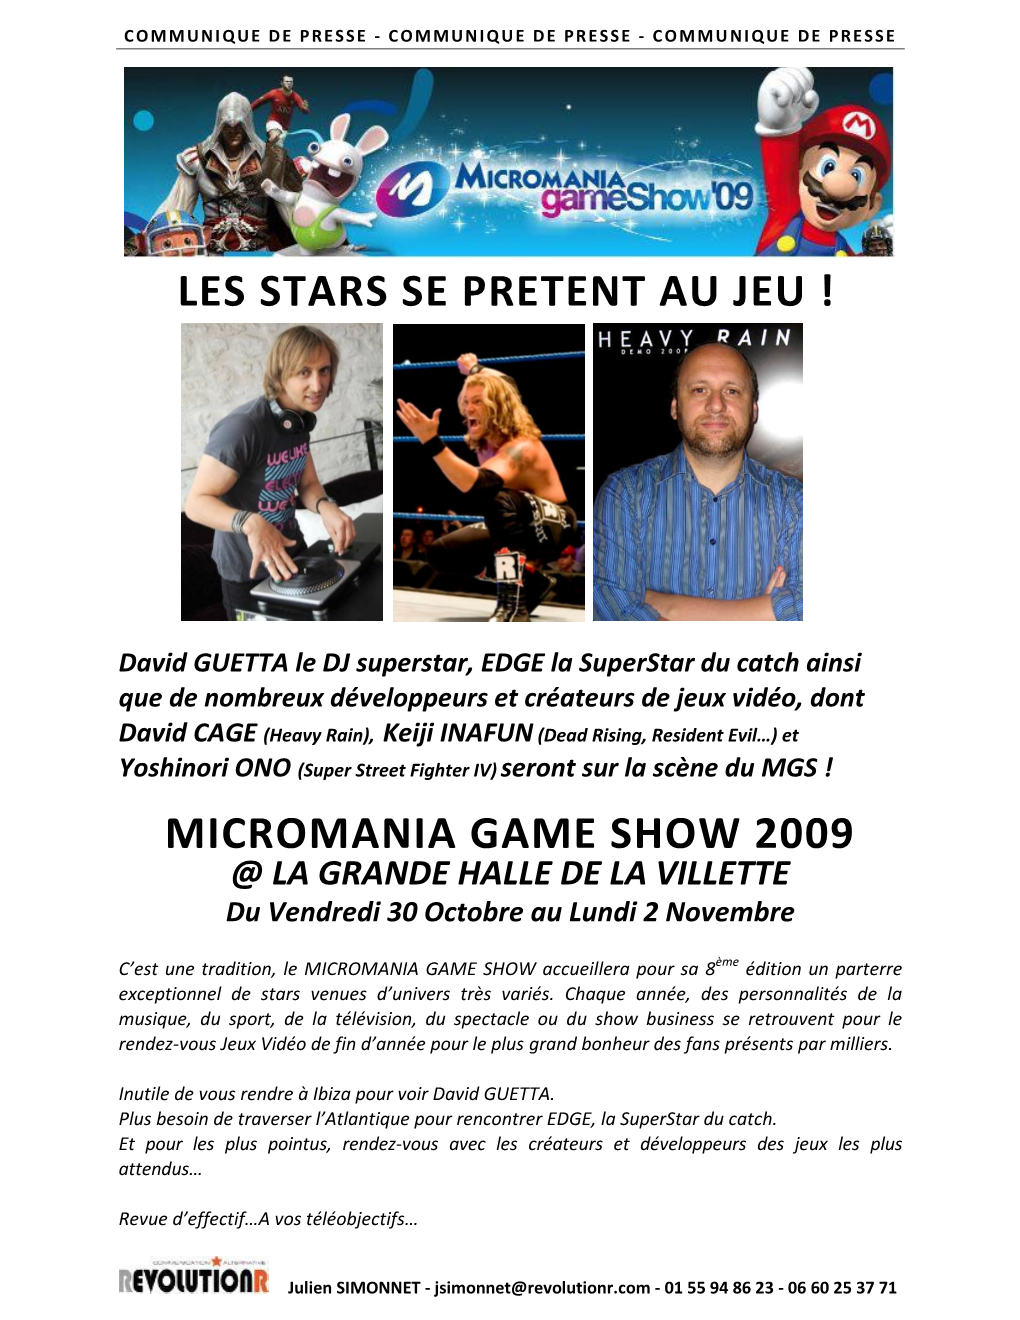 Les Stars Se Pretent Au Jeu ! Micromania Game Show 2009